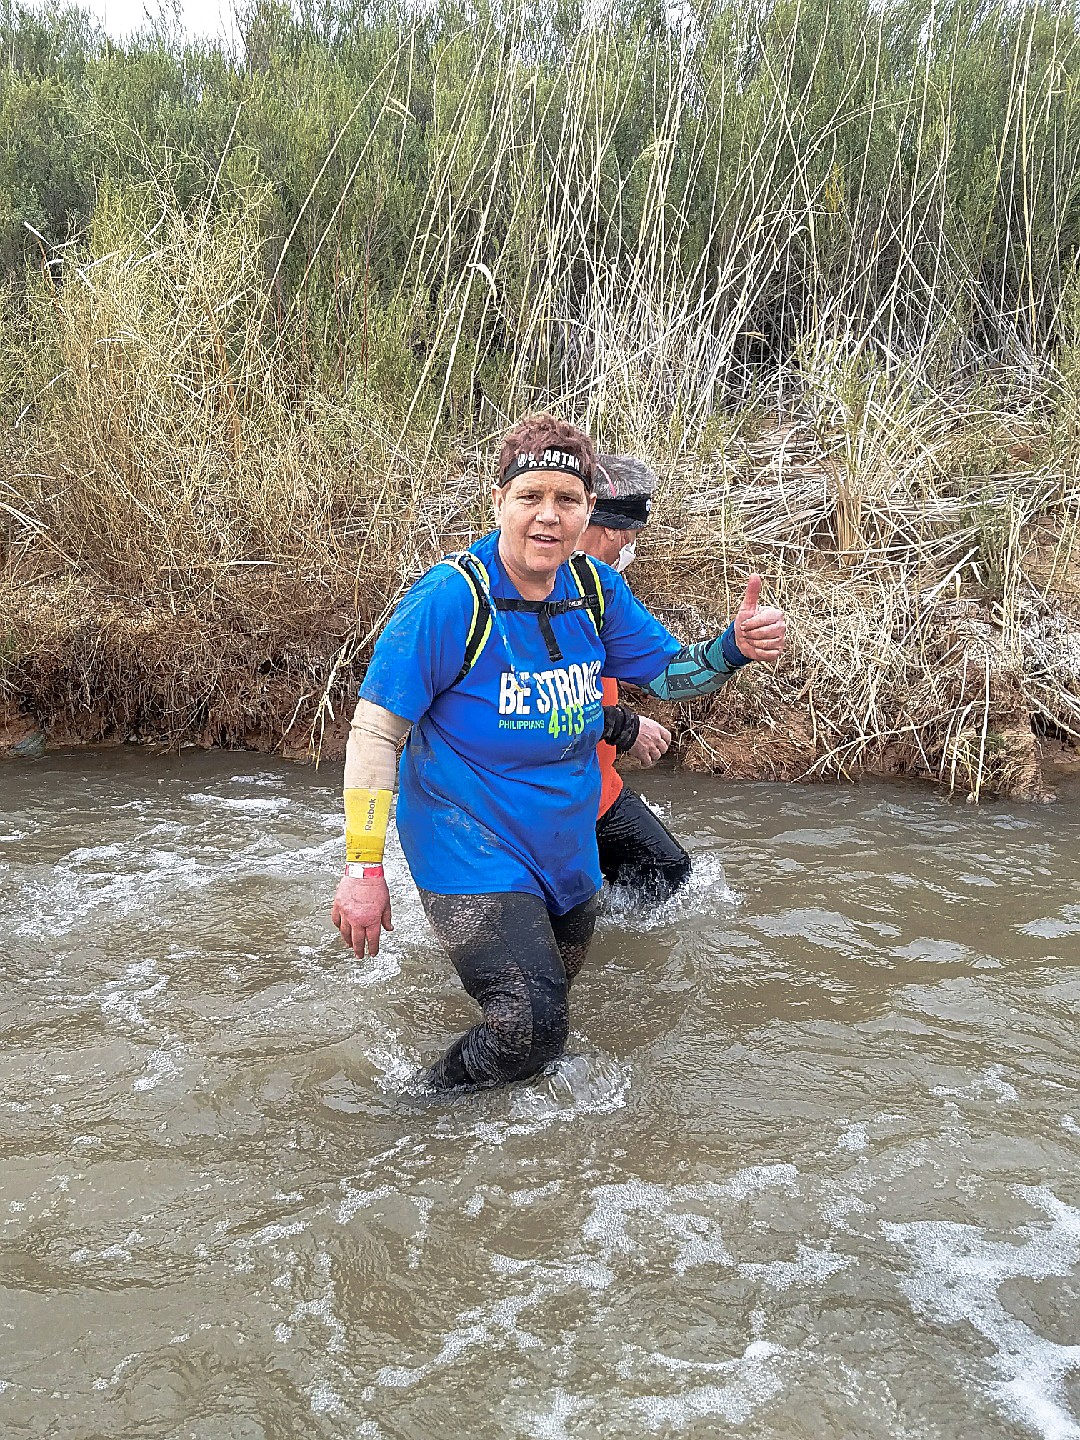 Roxanna Escuerdo wades through water on the 8.4 mile the Spartan Super course in Las Vegas. (Courtesy photo)